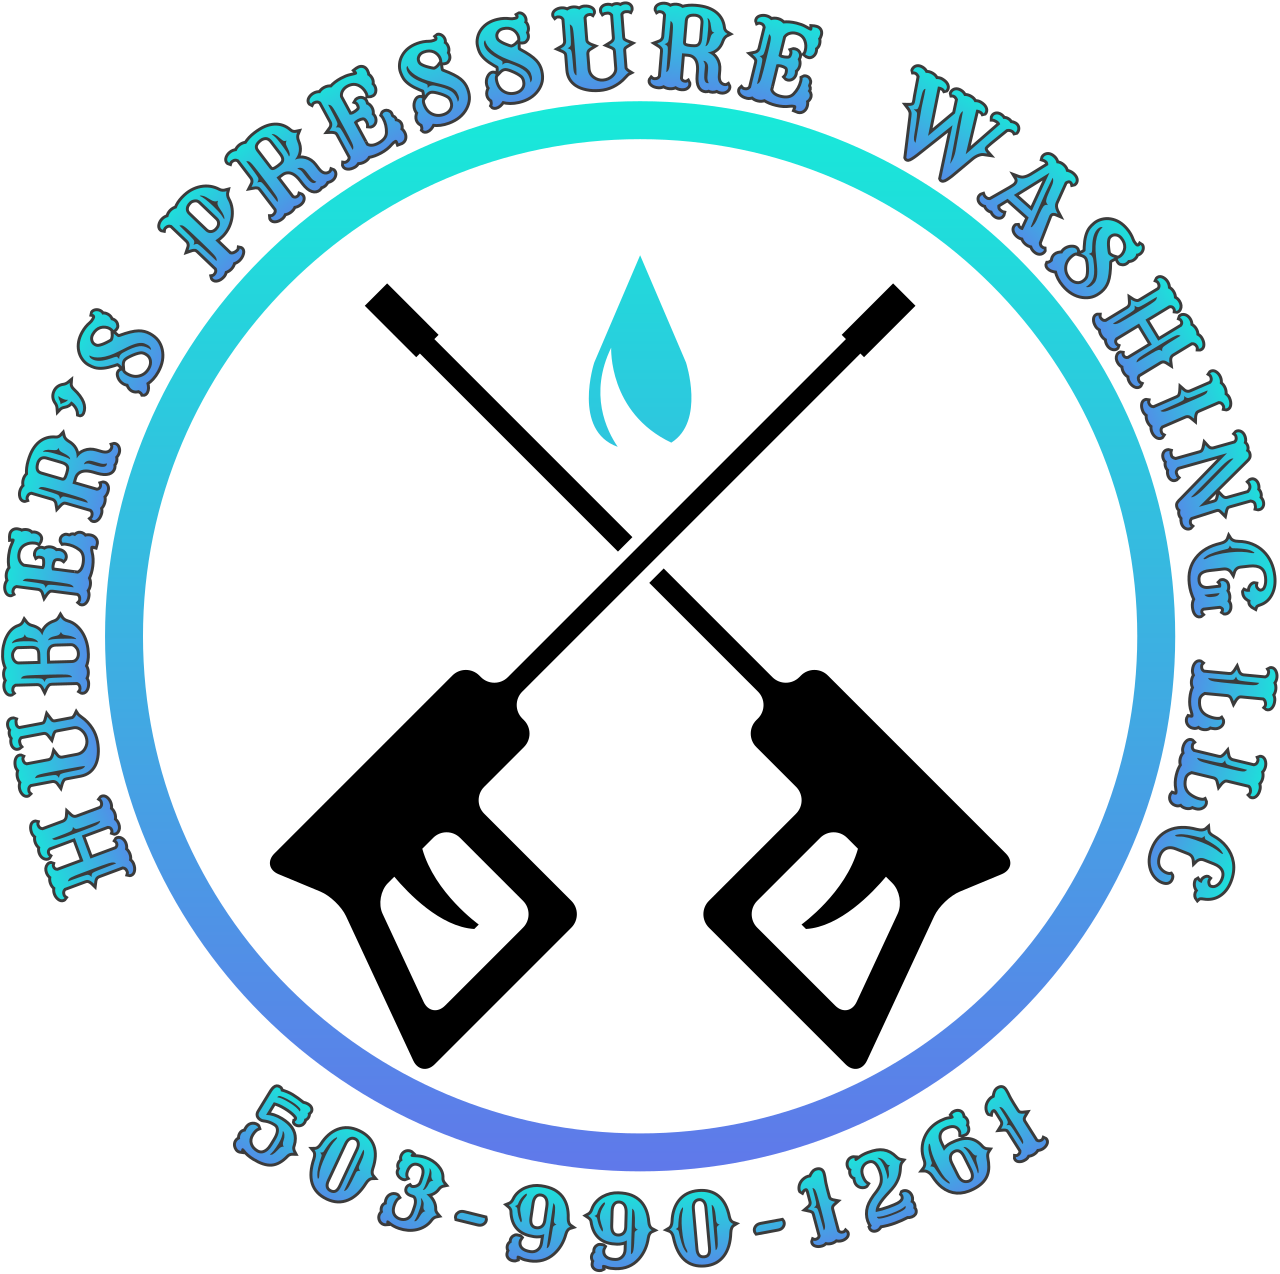 HUBER’S  PRESSURE  WASHING LLC's web page